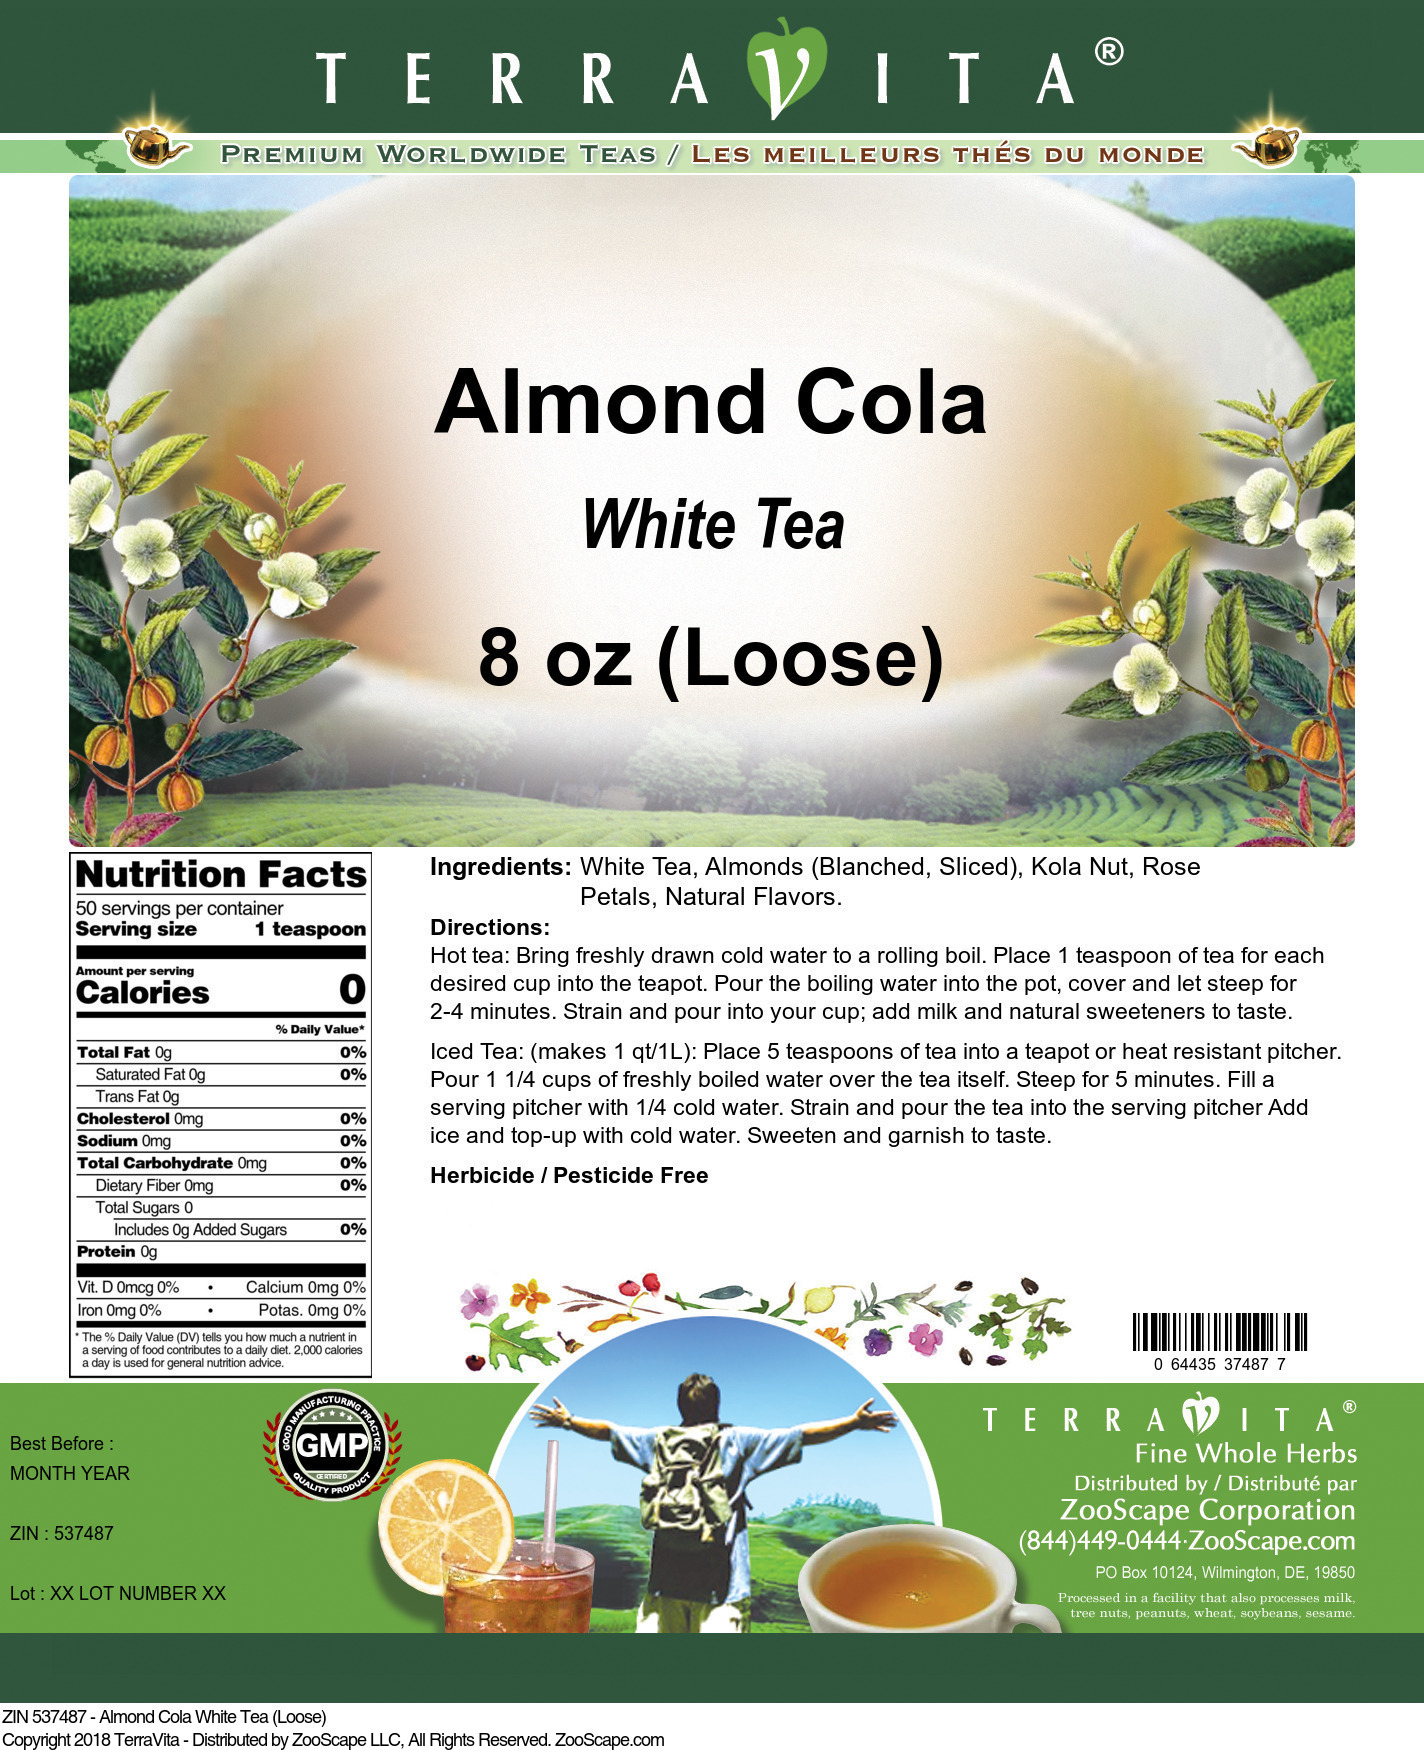 Almond Cola White Tea (Loose) - Label